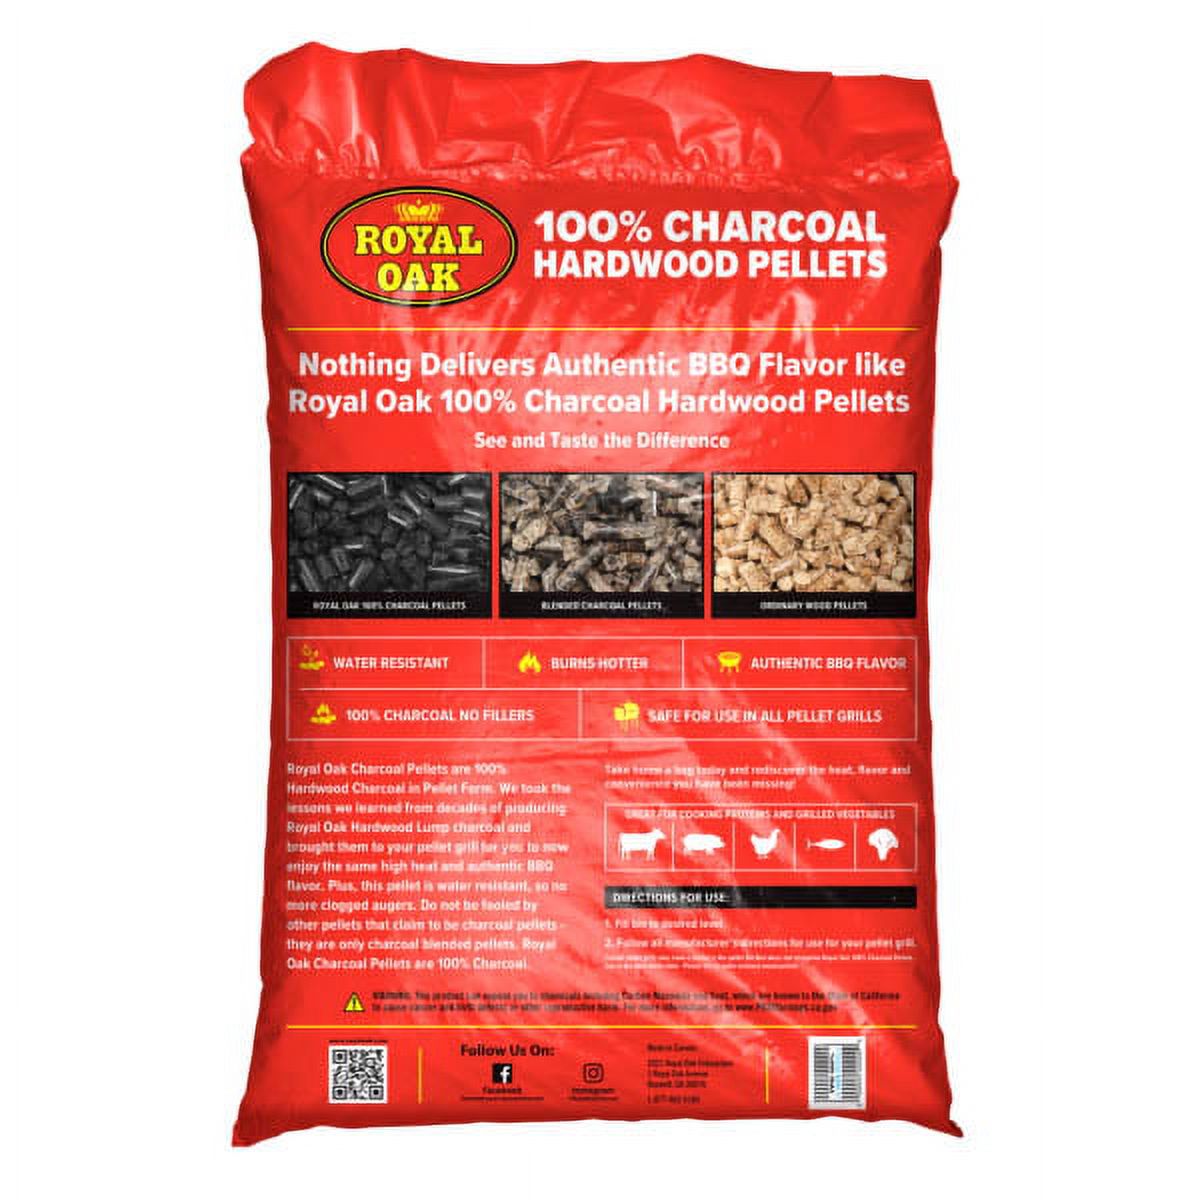 Royal Oak 100% Hardwood Charcoal Pellets, 20 Pounds - image 2 of 3